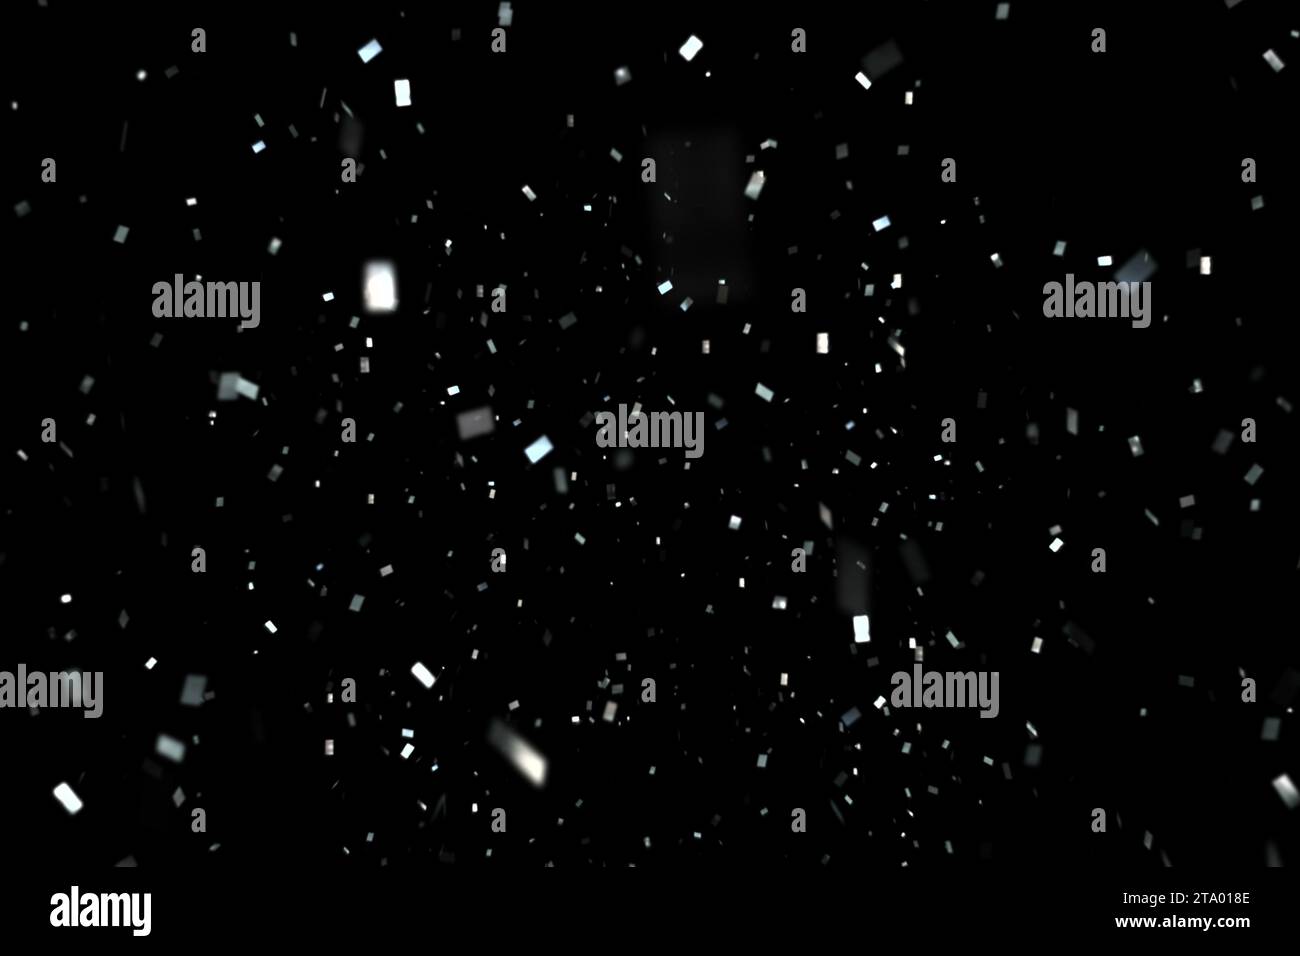 falling silver metallic glitter foil confetti, animation movement on black background, holiday and festive fun concept Stock Photo